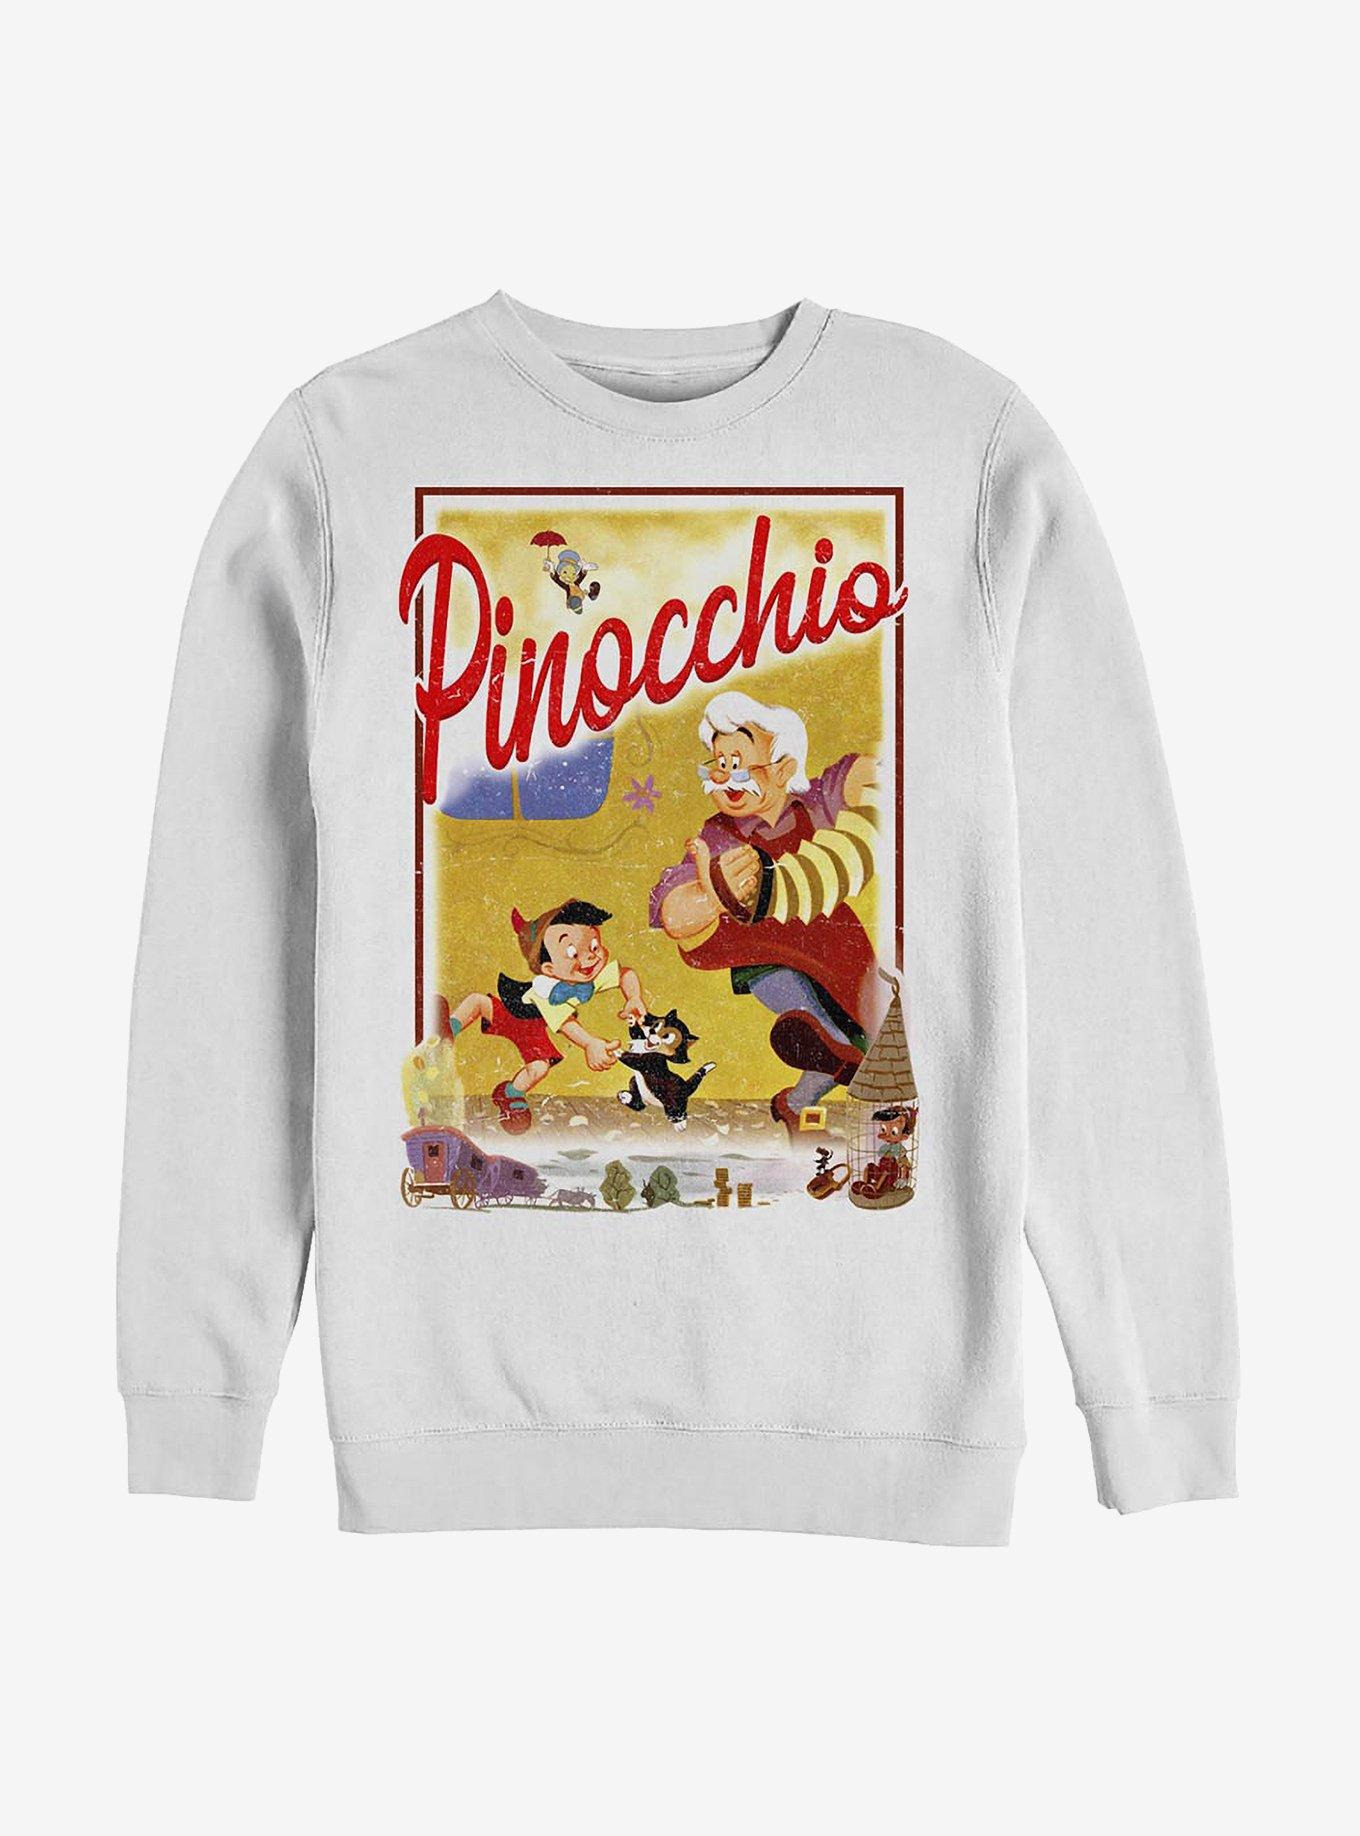 Disney Pinocchio Storybook Poster Crew Sweatshirt